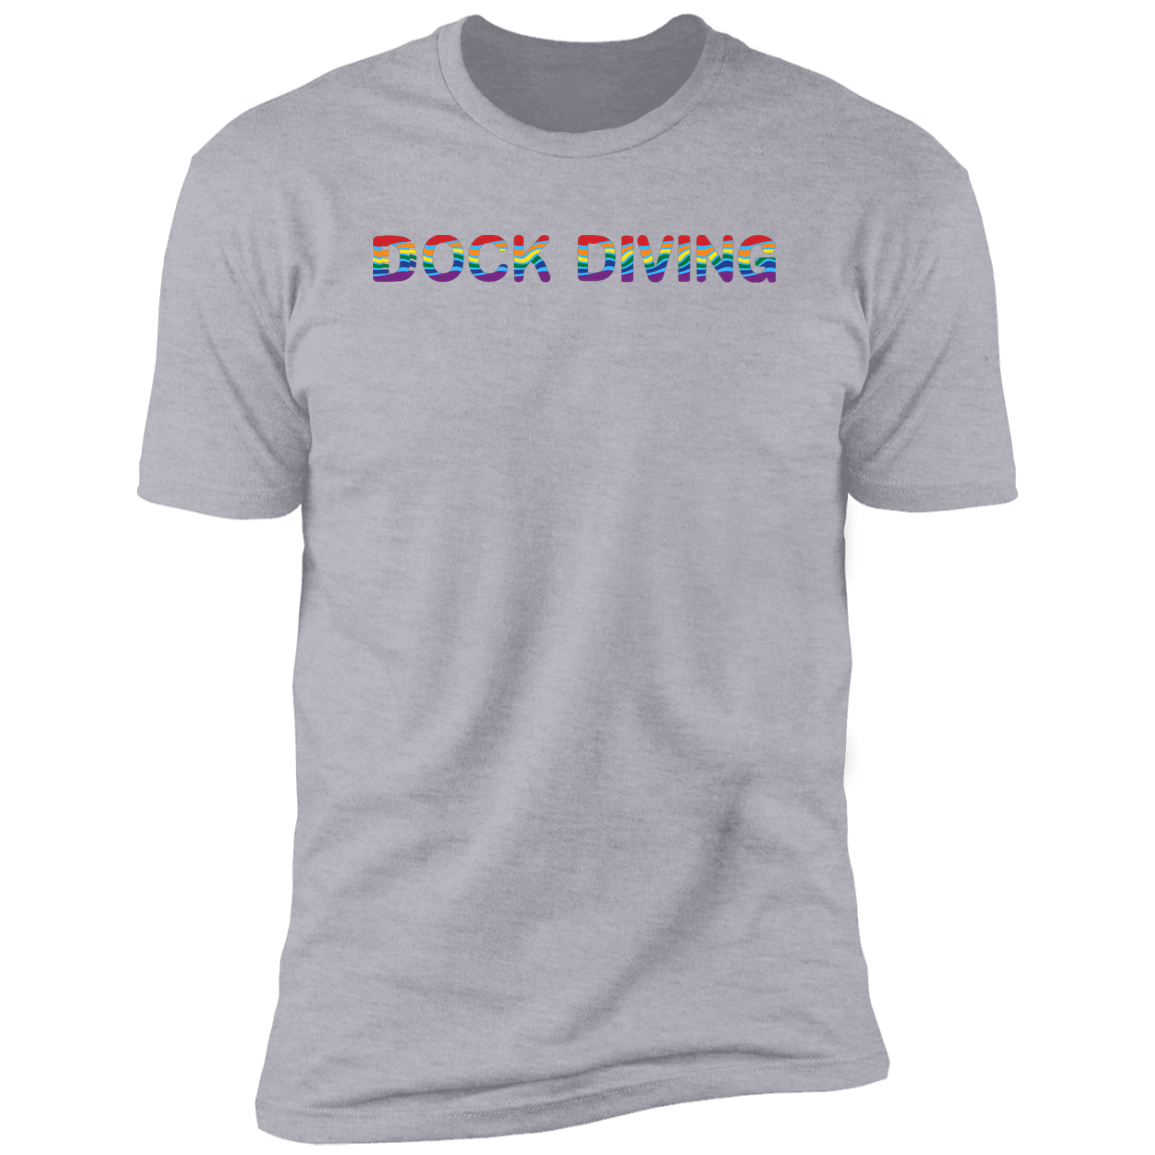 Dock Diving Pride Dock diving t-shirt, dog pride dock diving shirt for humans, in light heather gray